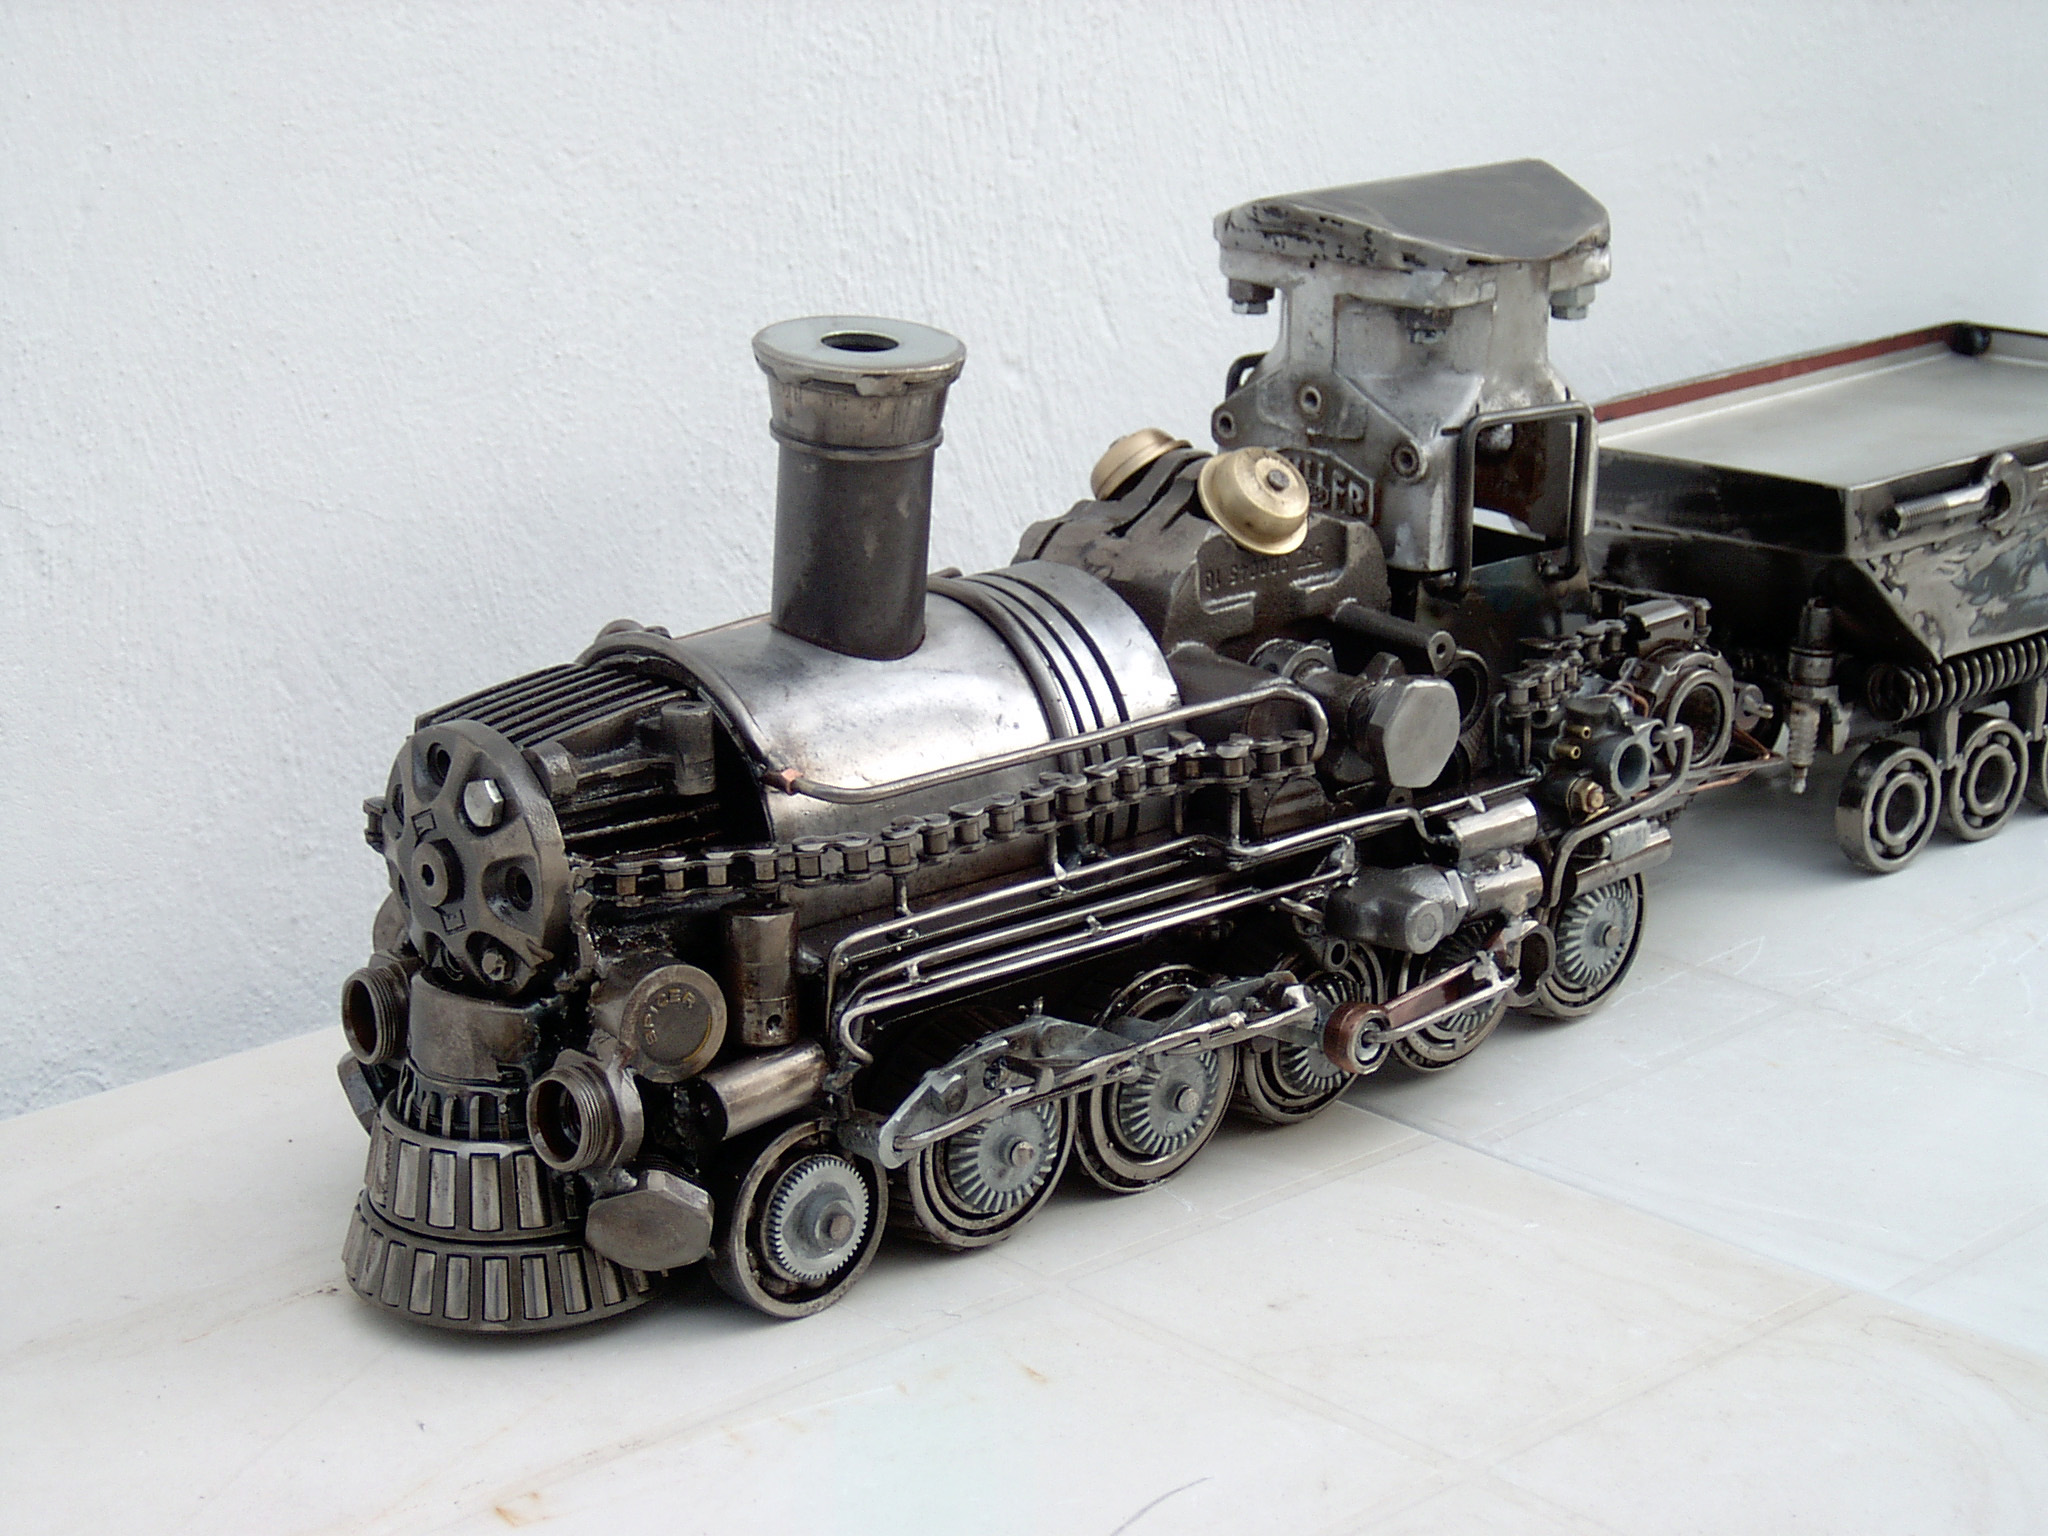 Metal art train sculpture | The most amazing train sculpture